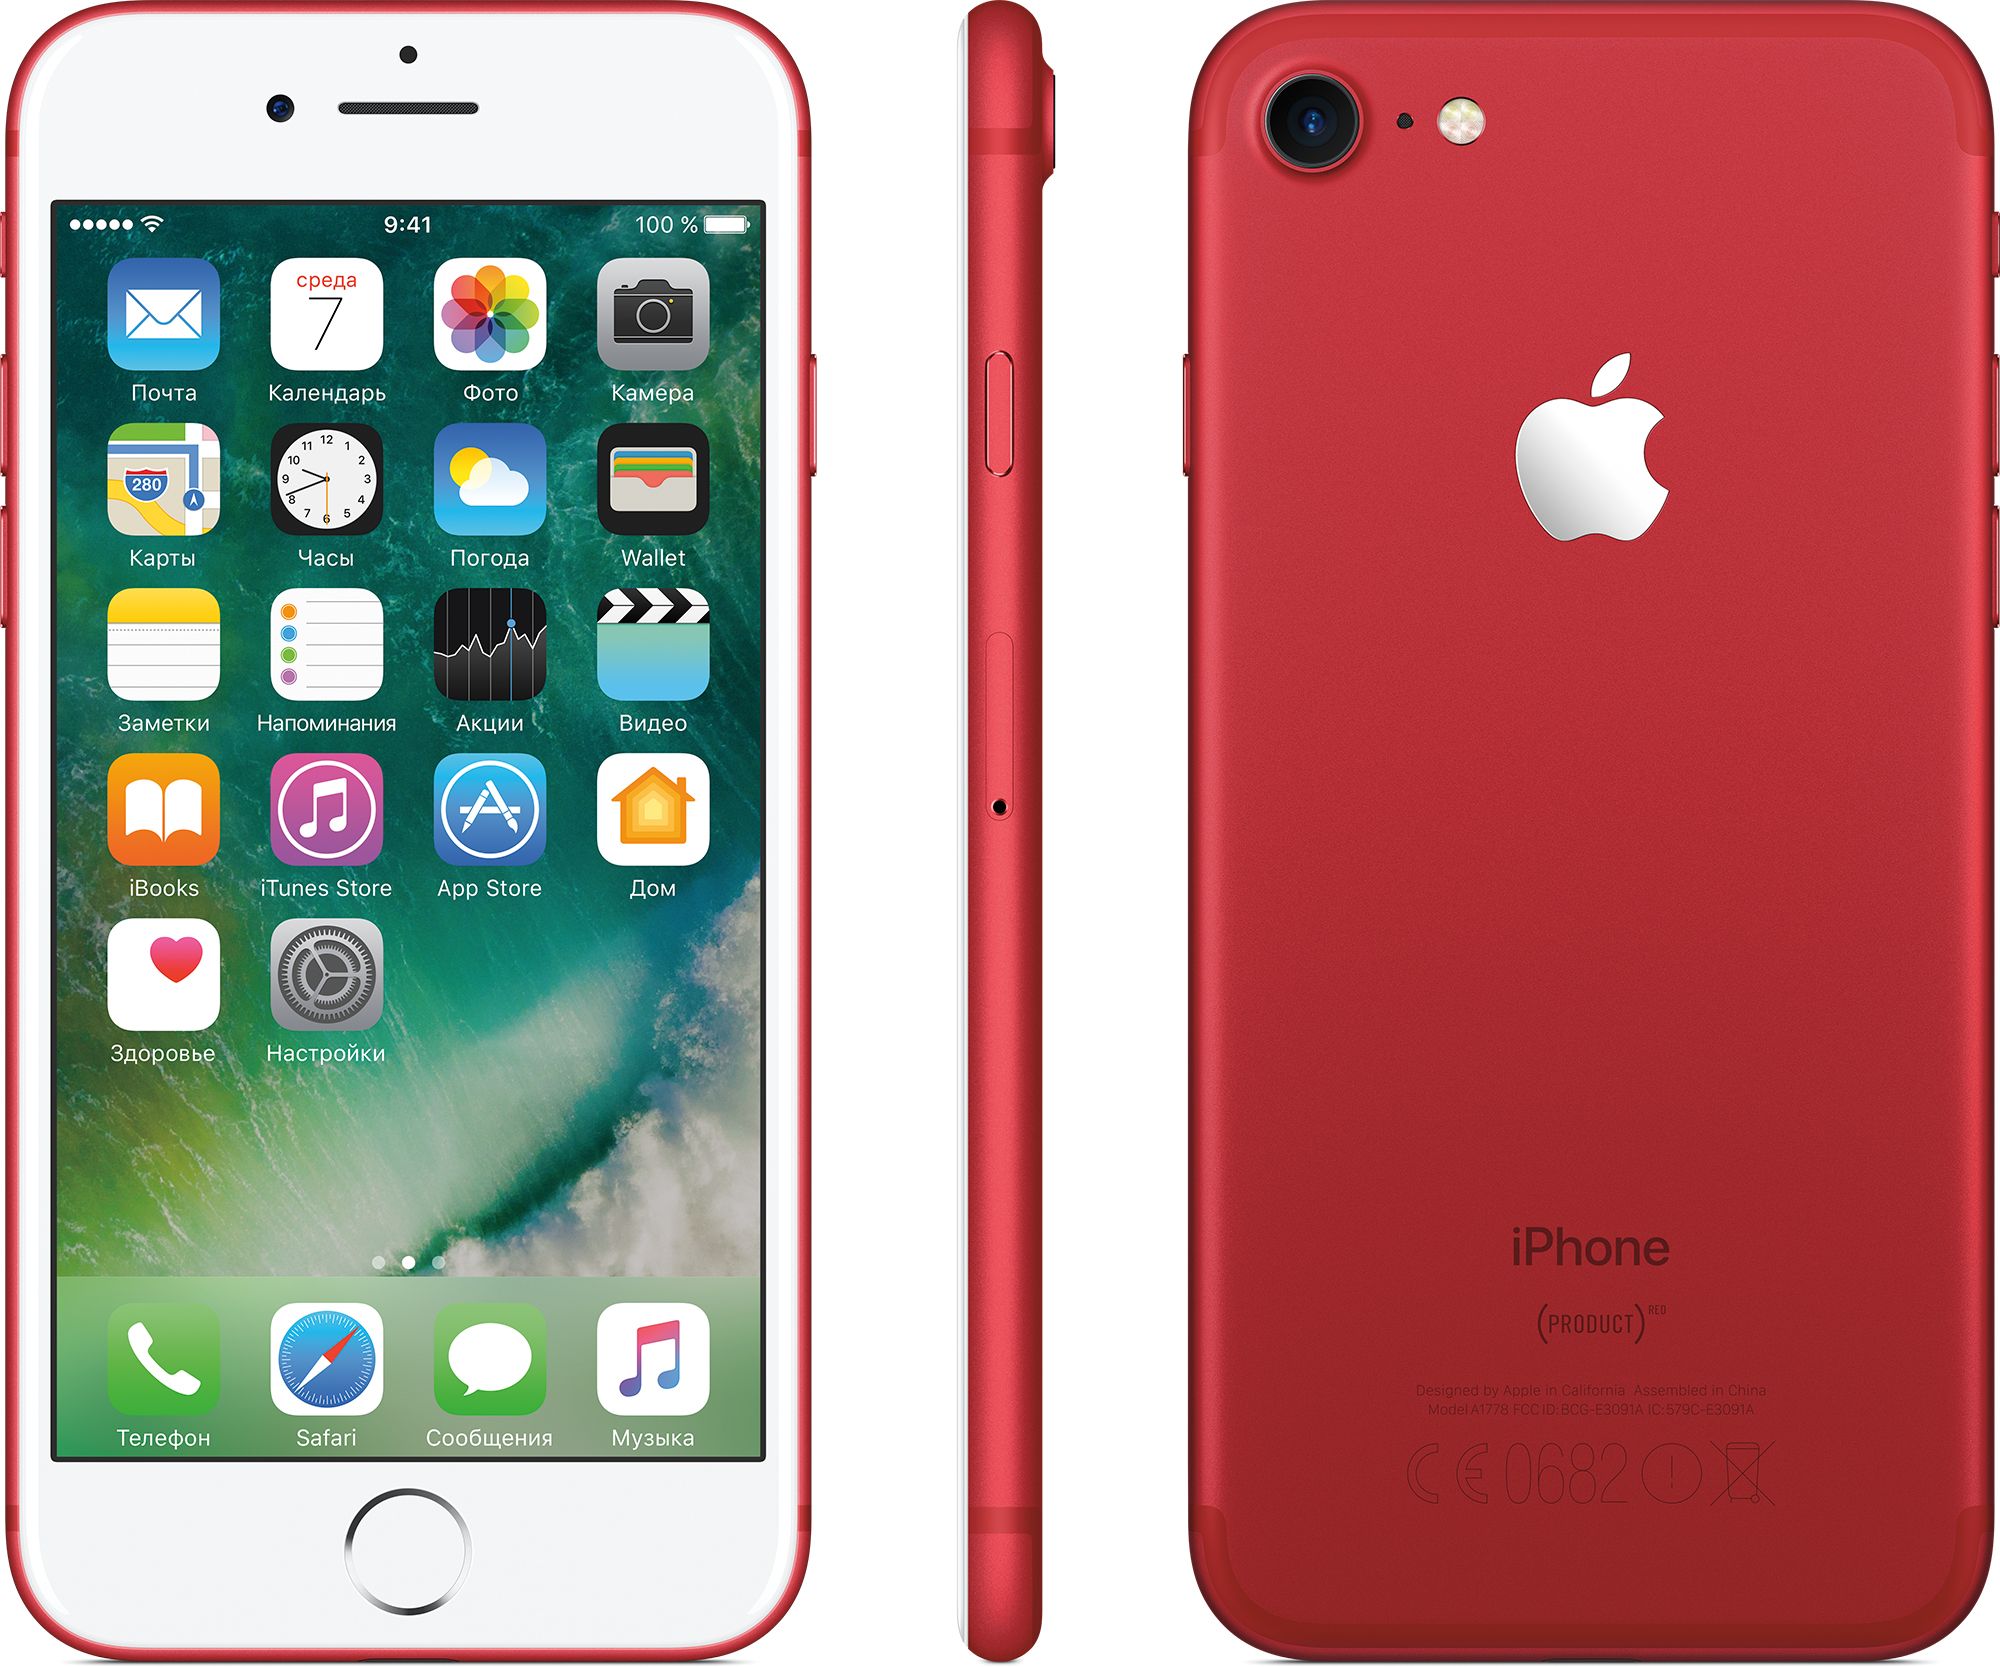 Apple iPhone 7 32GB Red